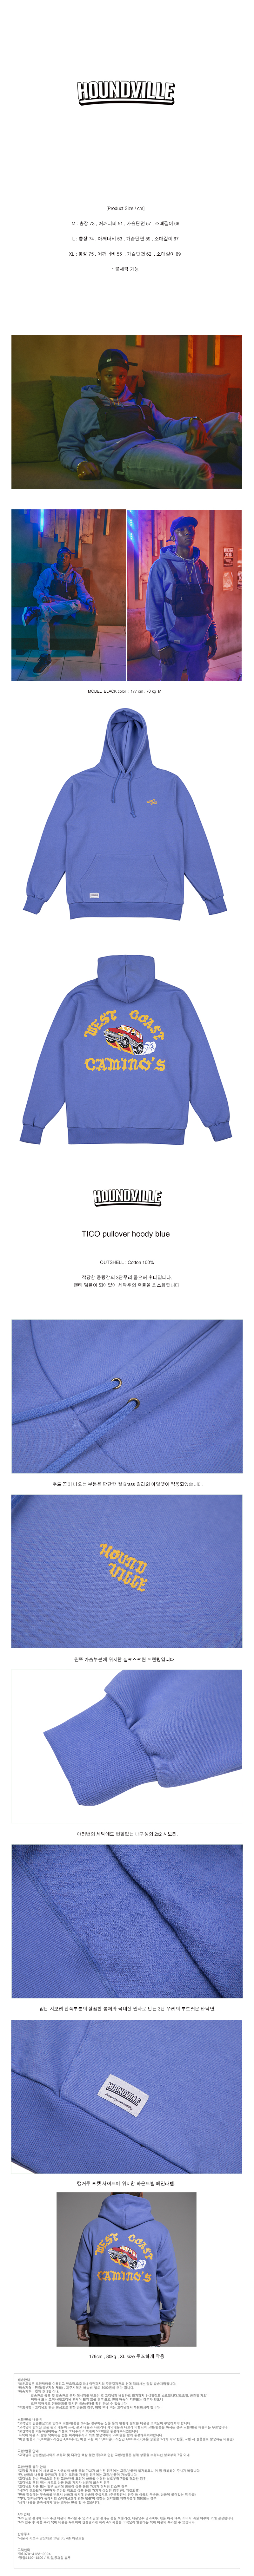 TICO pullover hoody blue.jpg